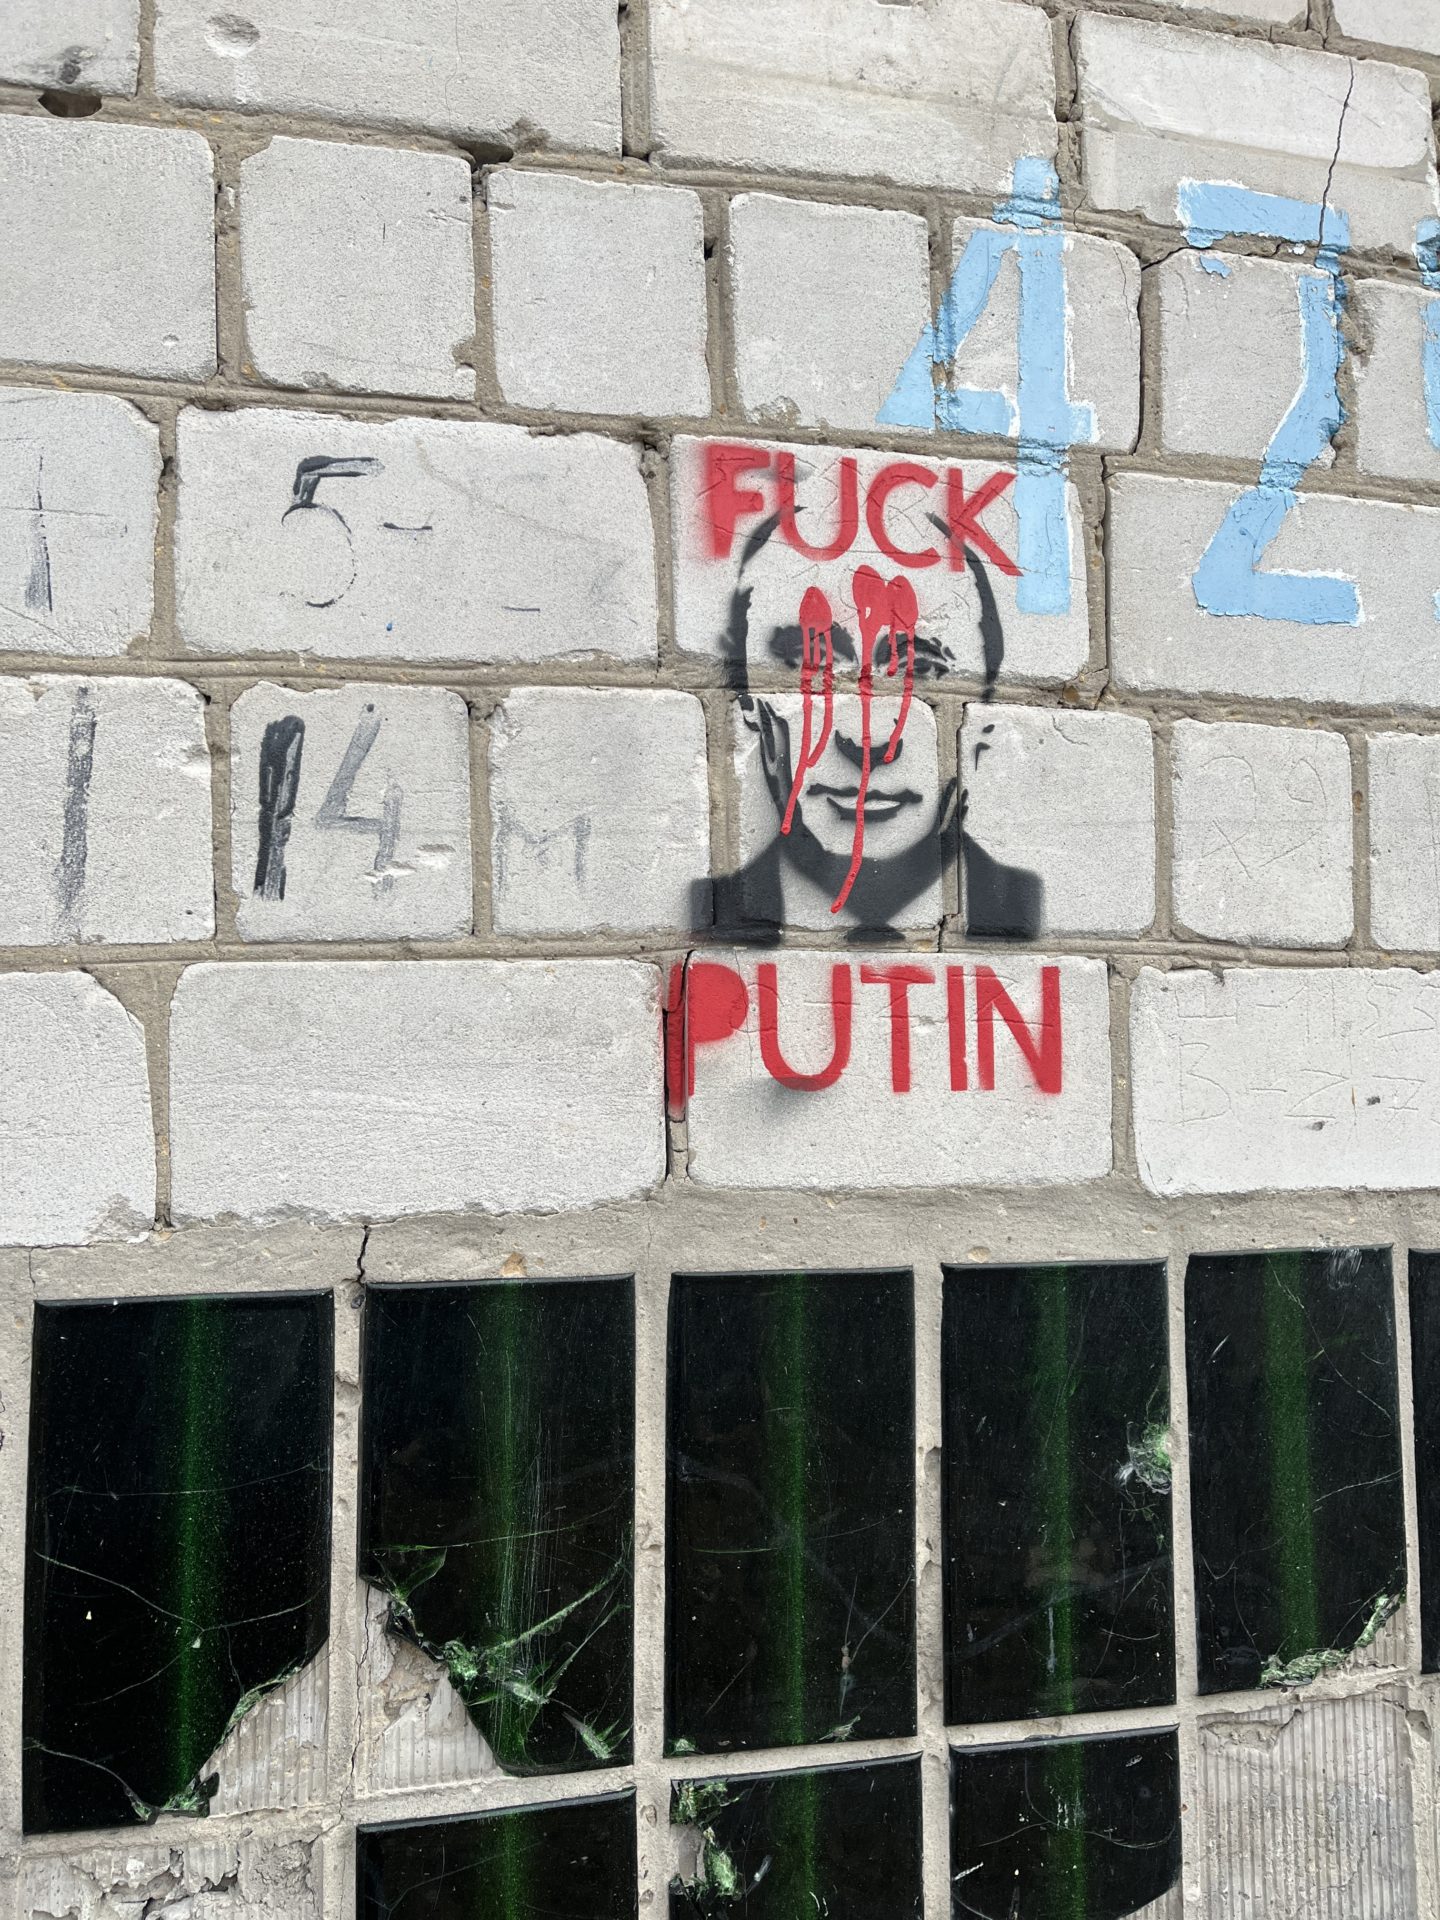 Graffiti in Kyiv suburb. Image: Newstalk